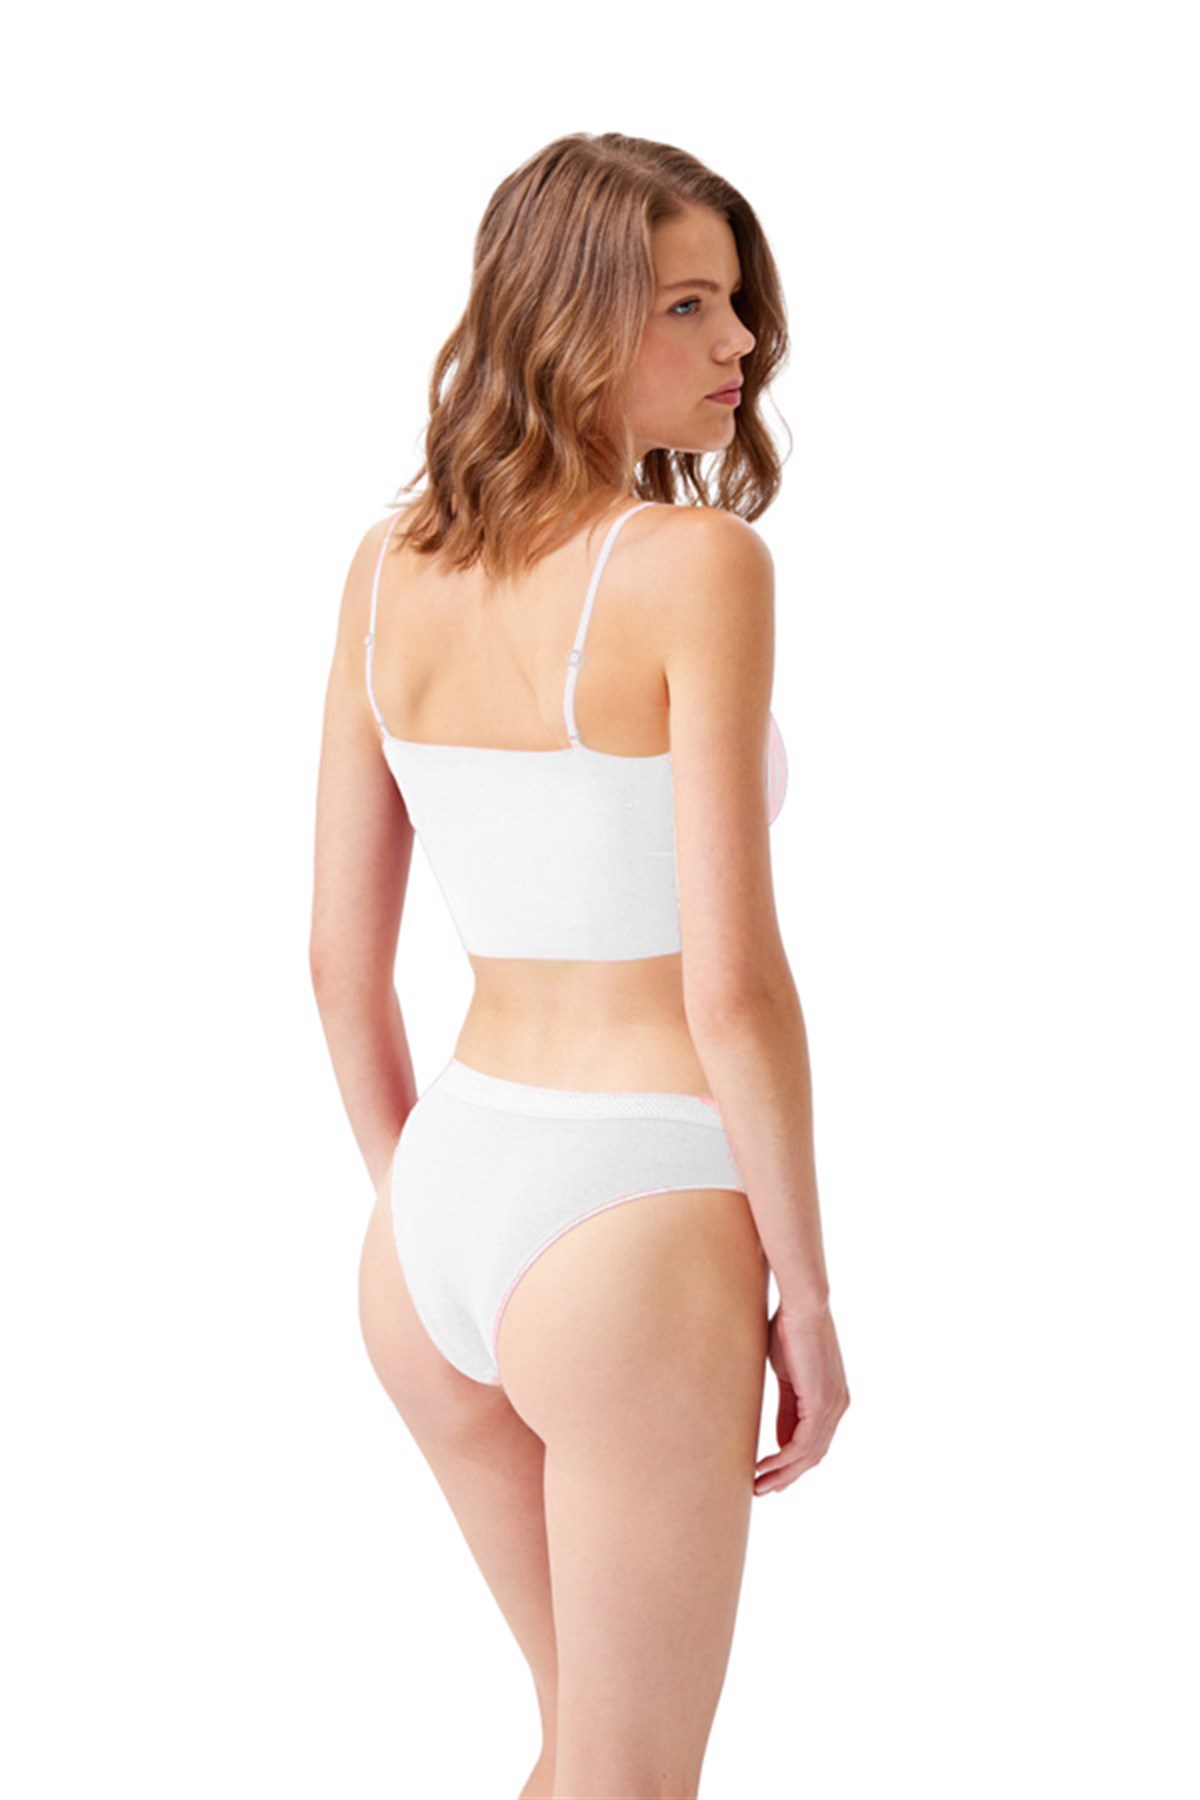 basic-sport-cotton-brazilian-women-panty-with-net-designed-elastic-waistband-ch0336-white-1-4